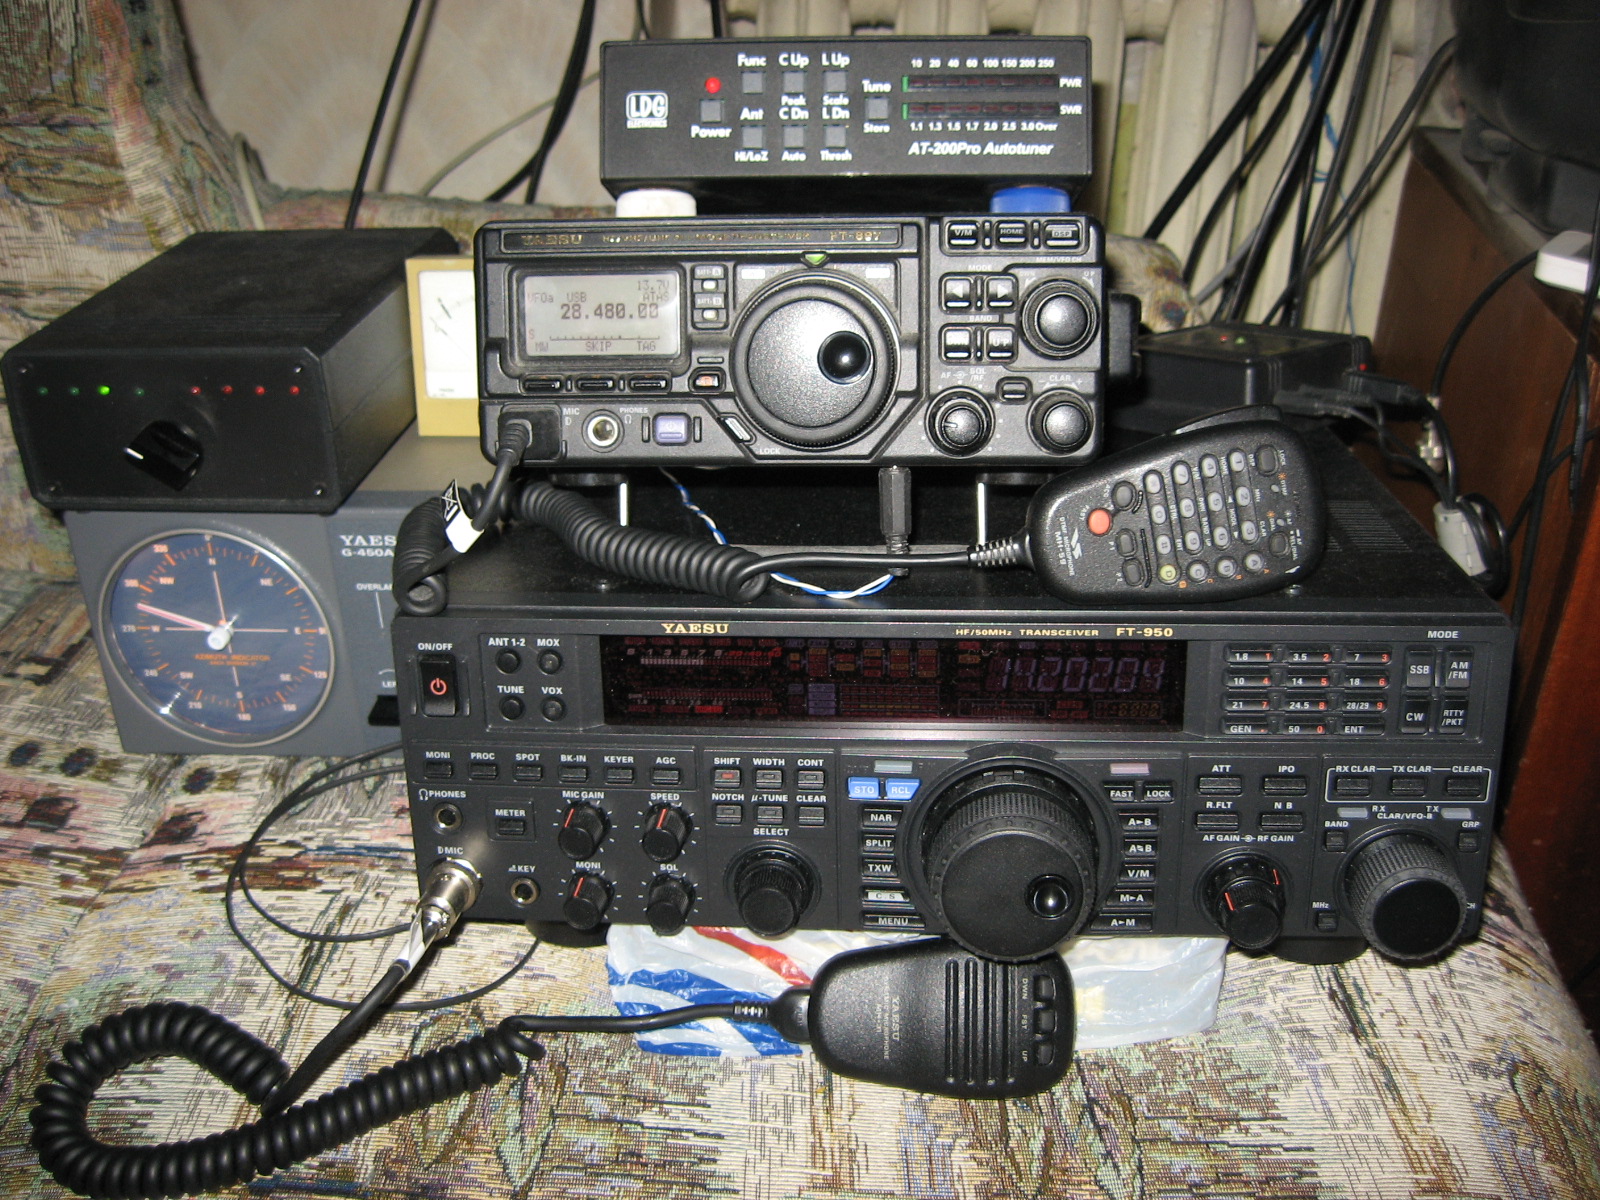 Радио форум. ФТ 950 трансивер. Yaesu ft-950. Yaesu ft-950 Digital Terminal. Трансивер Yaesu Радиолюбительский.